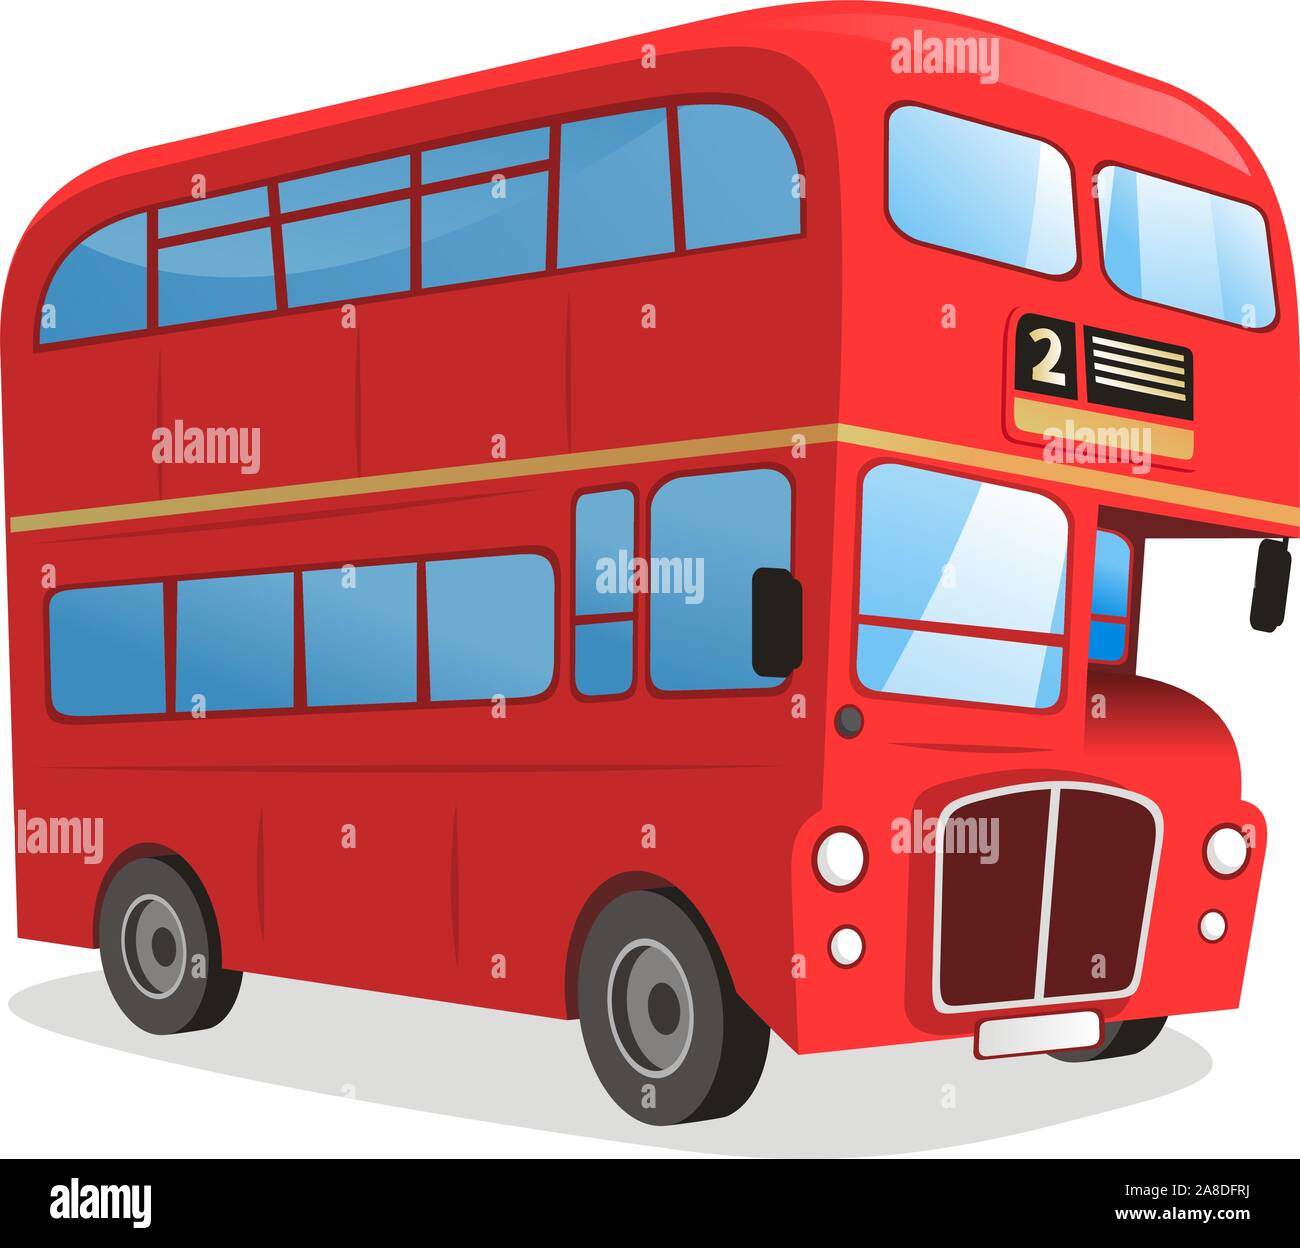 London Double Decker Bus Cartoon illustration Stock Vektor